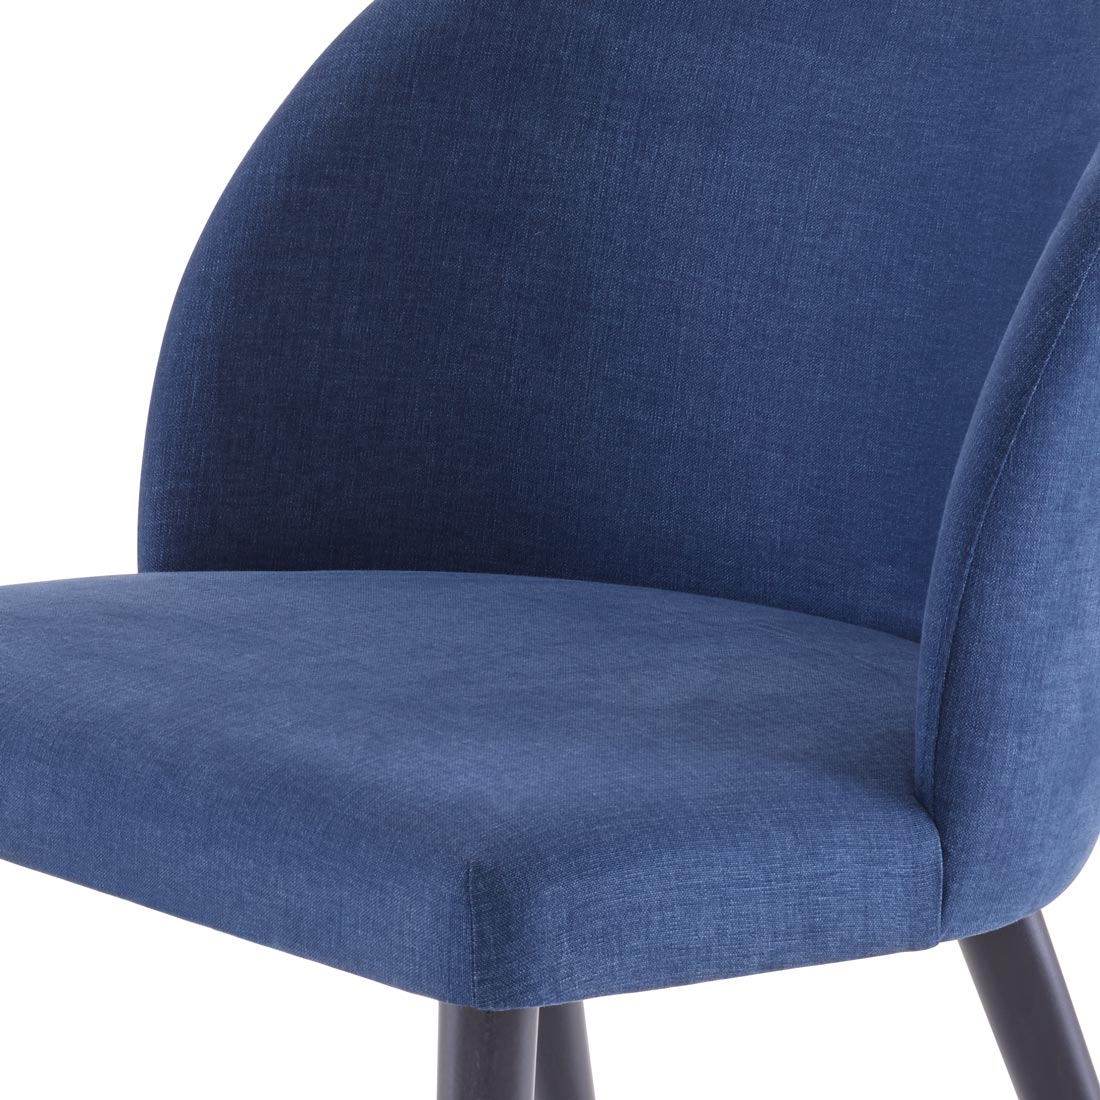 Image Chair fabric-bleu nuit (midnight blue)  7